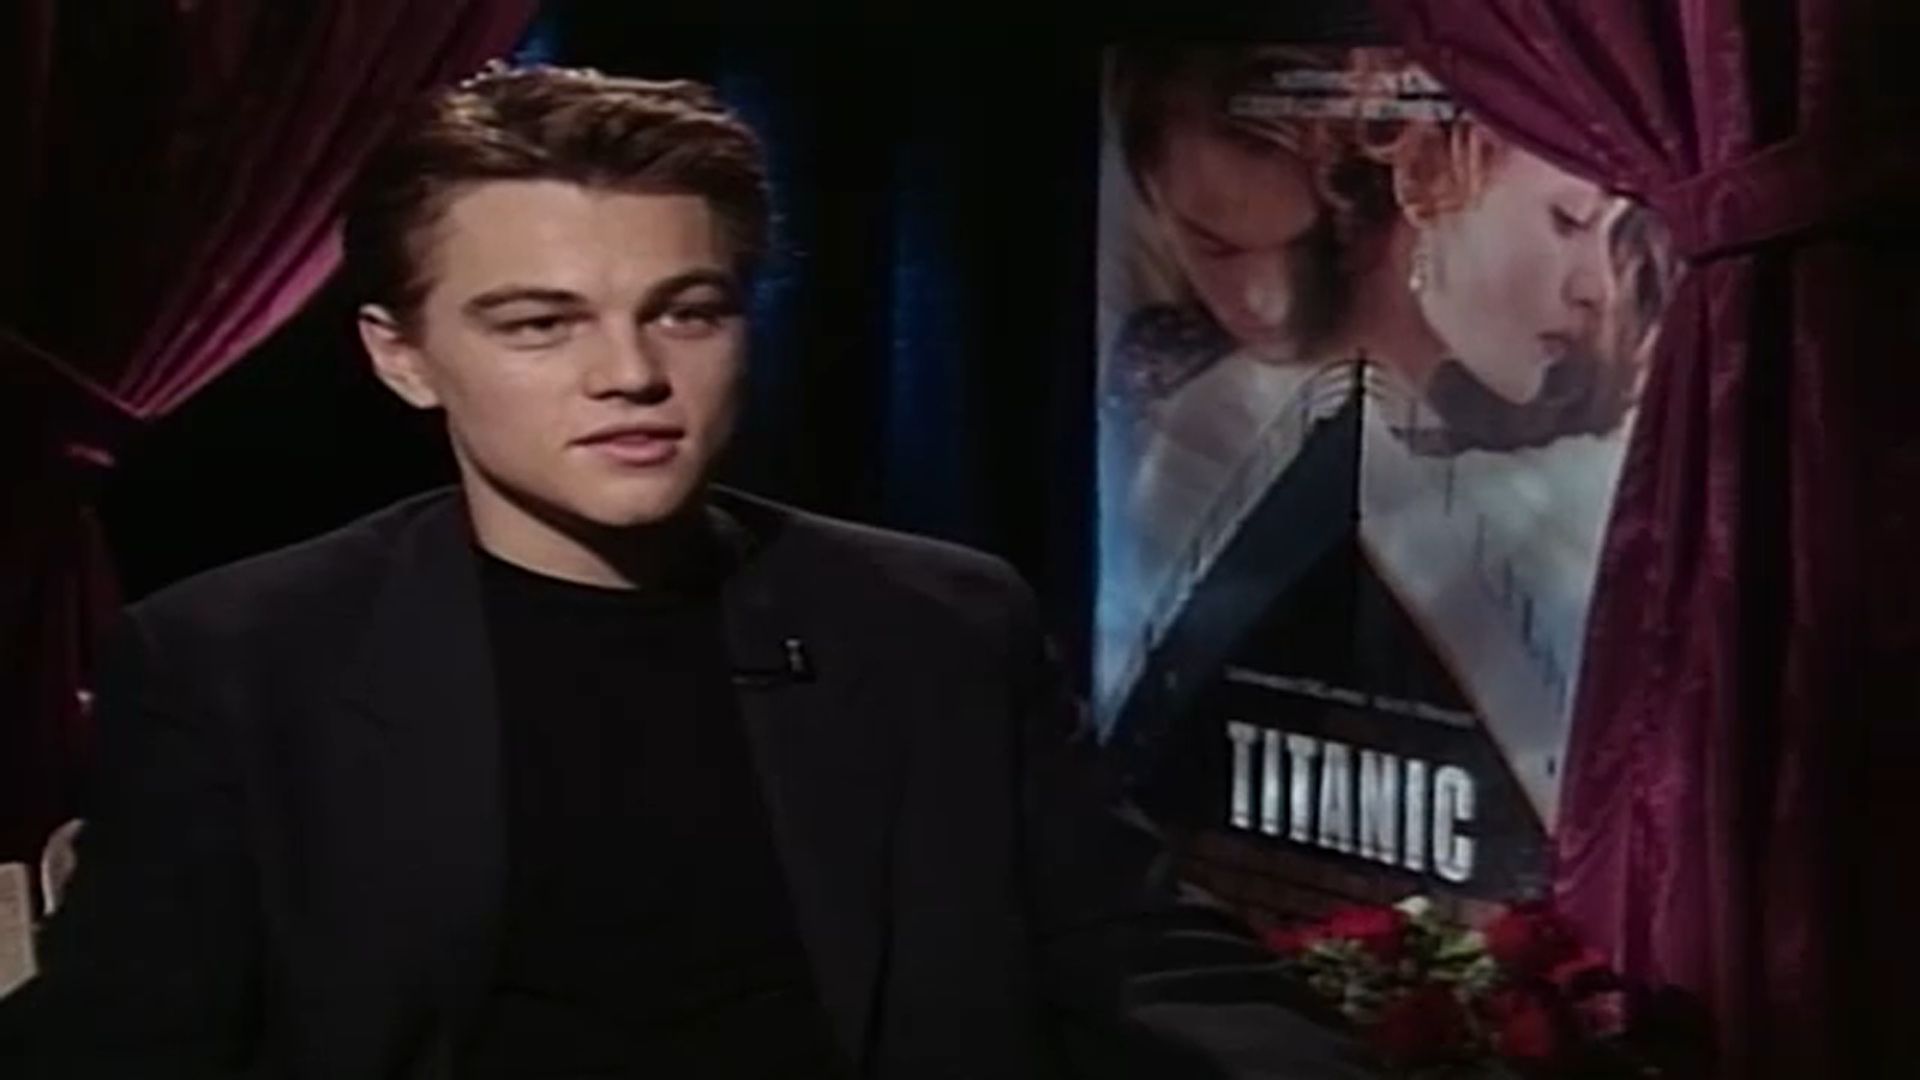 Titanic' movie director, James Cameron, almost didn't choose Leonardo  DiCaprio or Kate Winslet to star in iconic film - 6abc Philadelphia